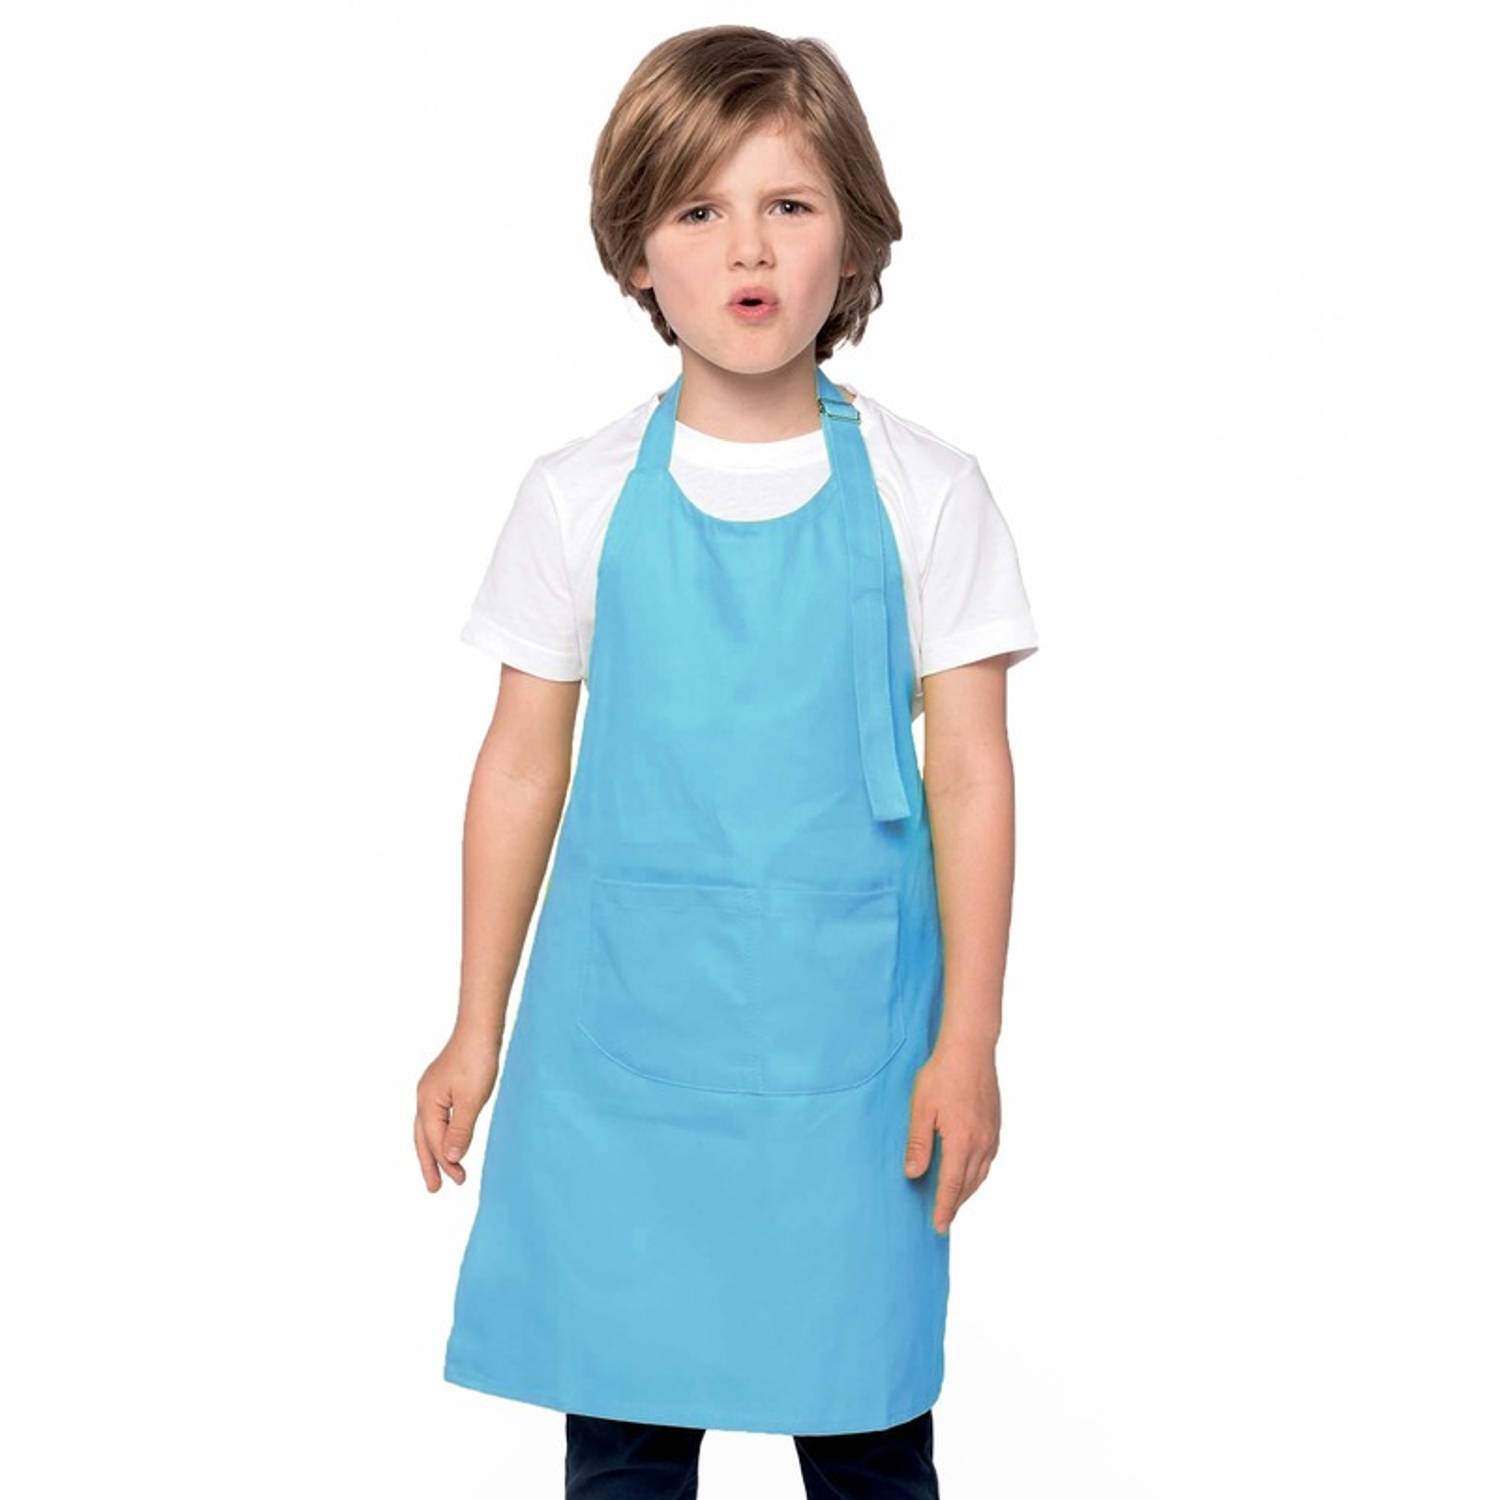 Basic schort kind blauw keukenschort- kliederschort- kookschort- knutselschort- kinderschort